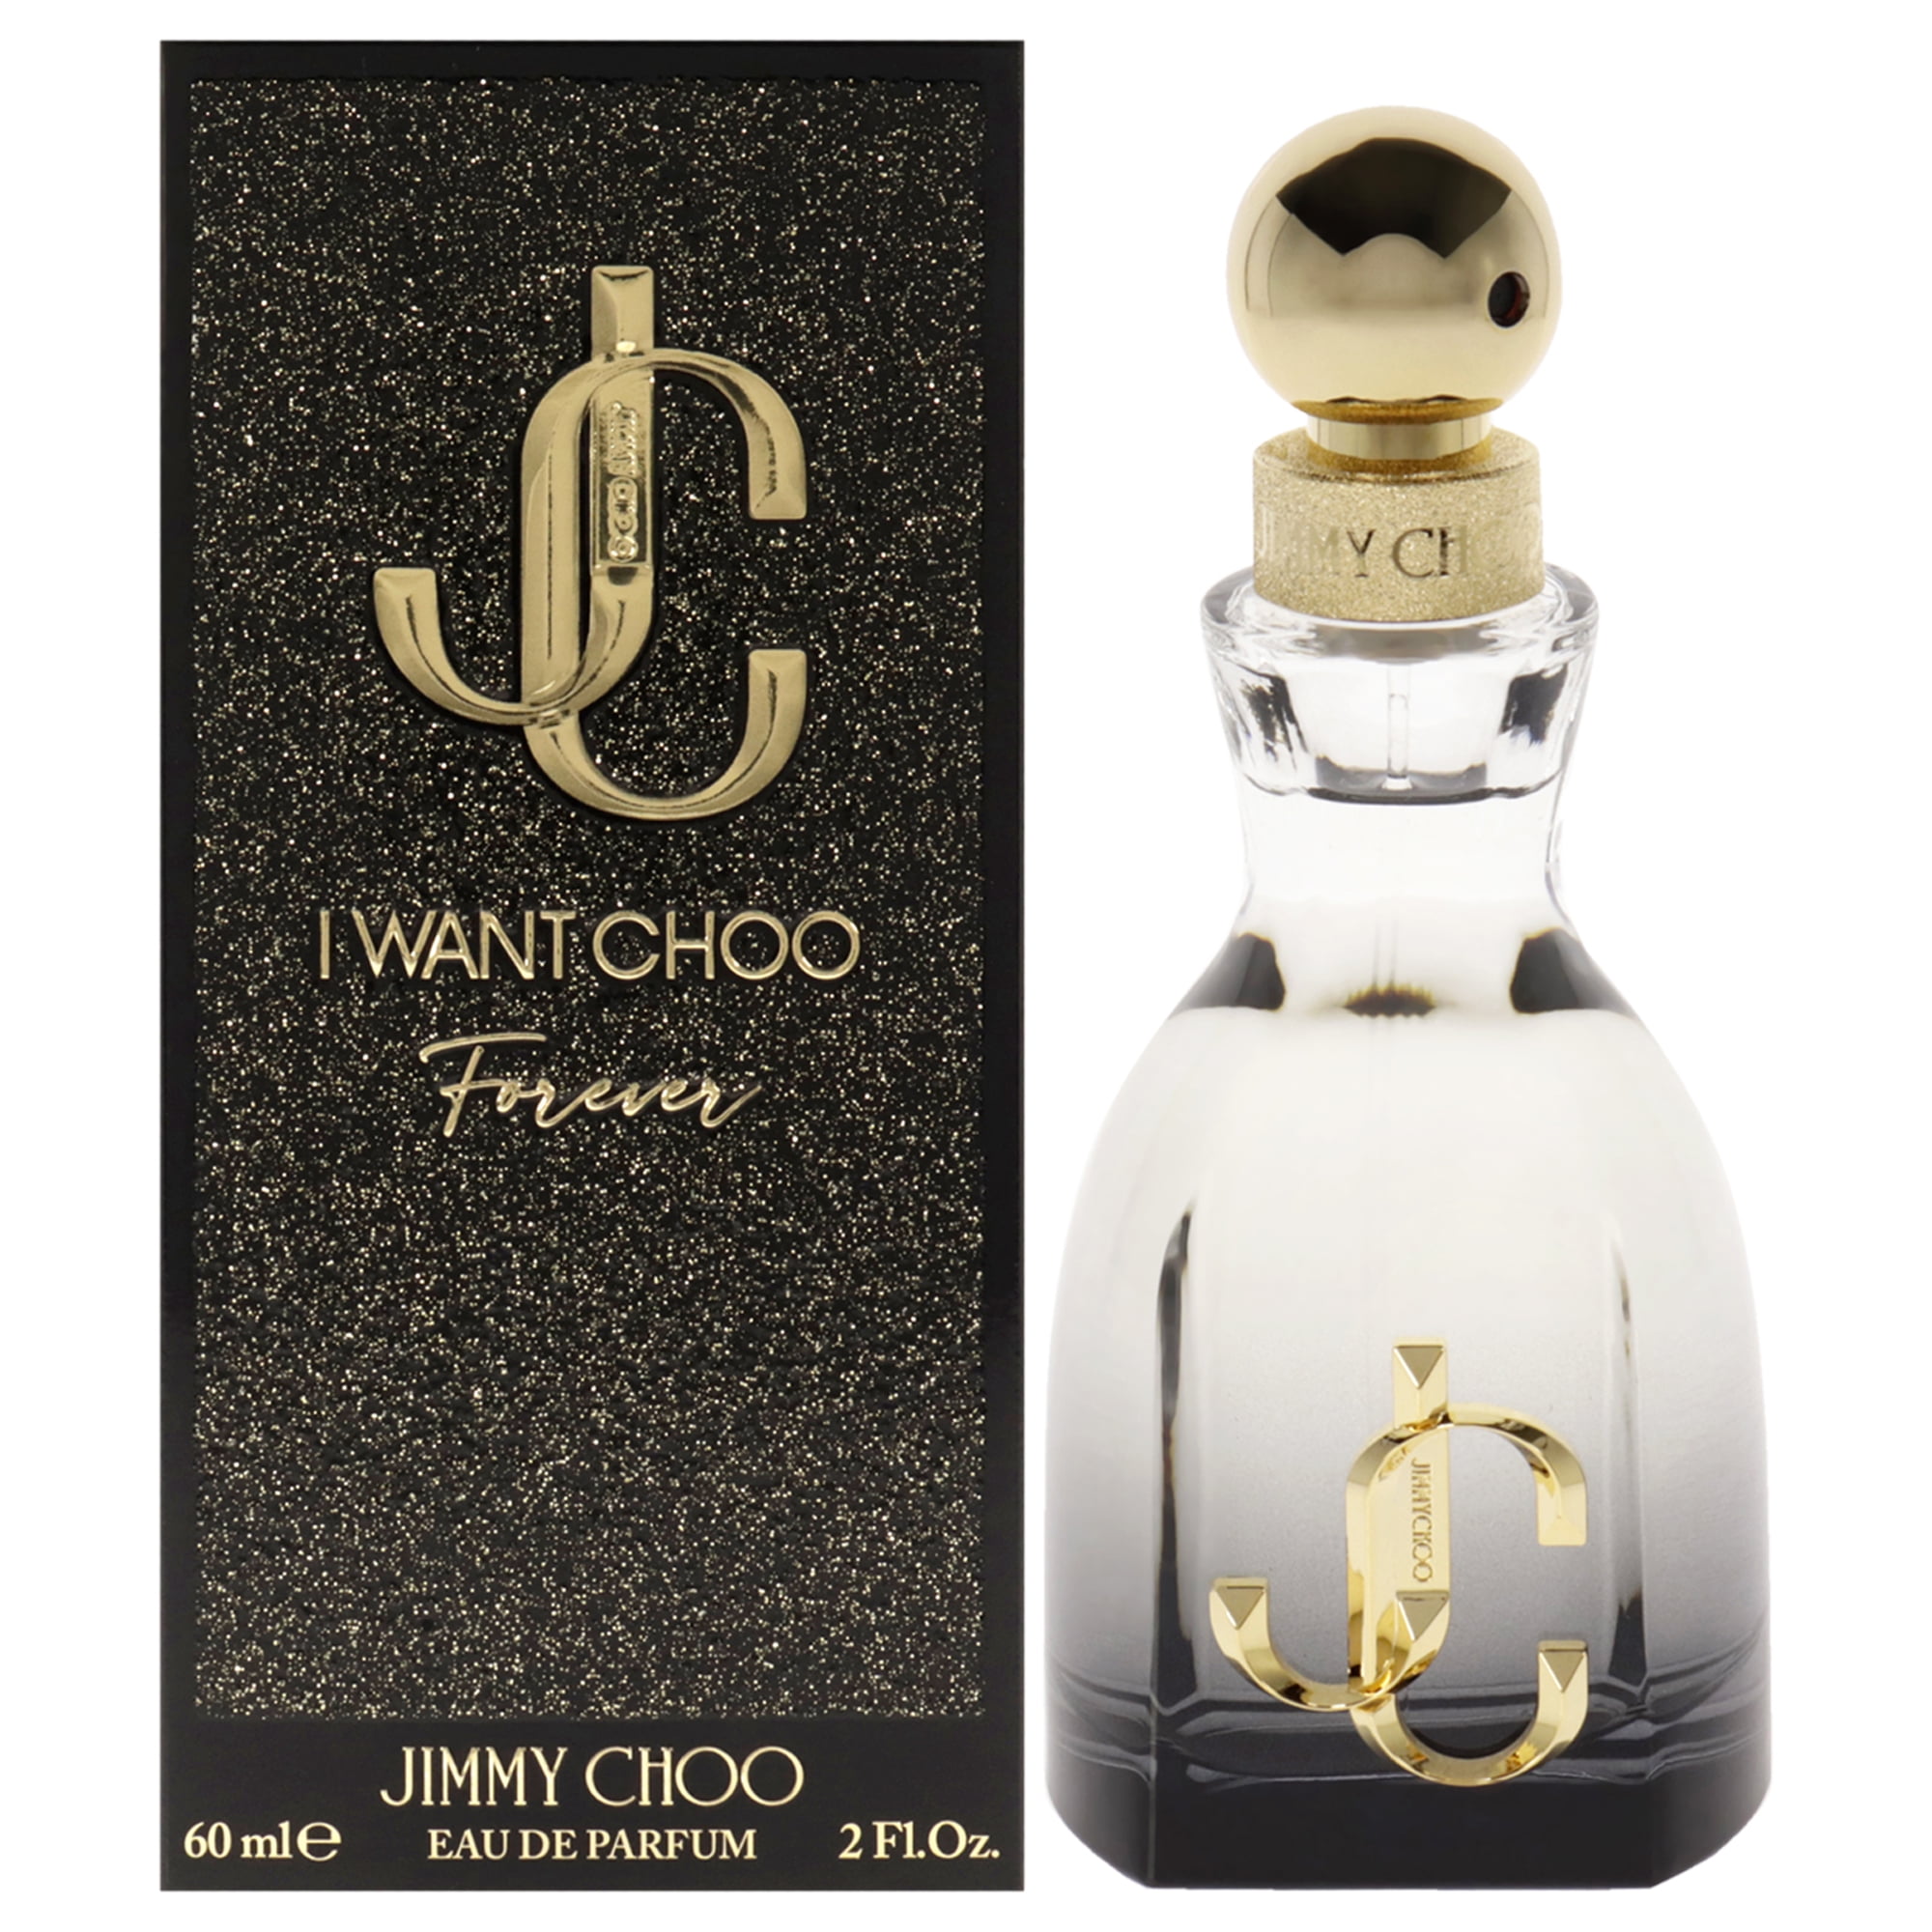 Jimmy Choo I Want Choo Forever Eau de Parfum Spray - 2 oz.